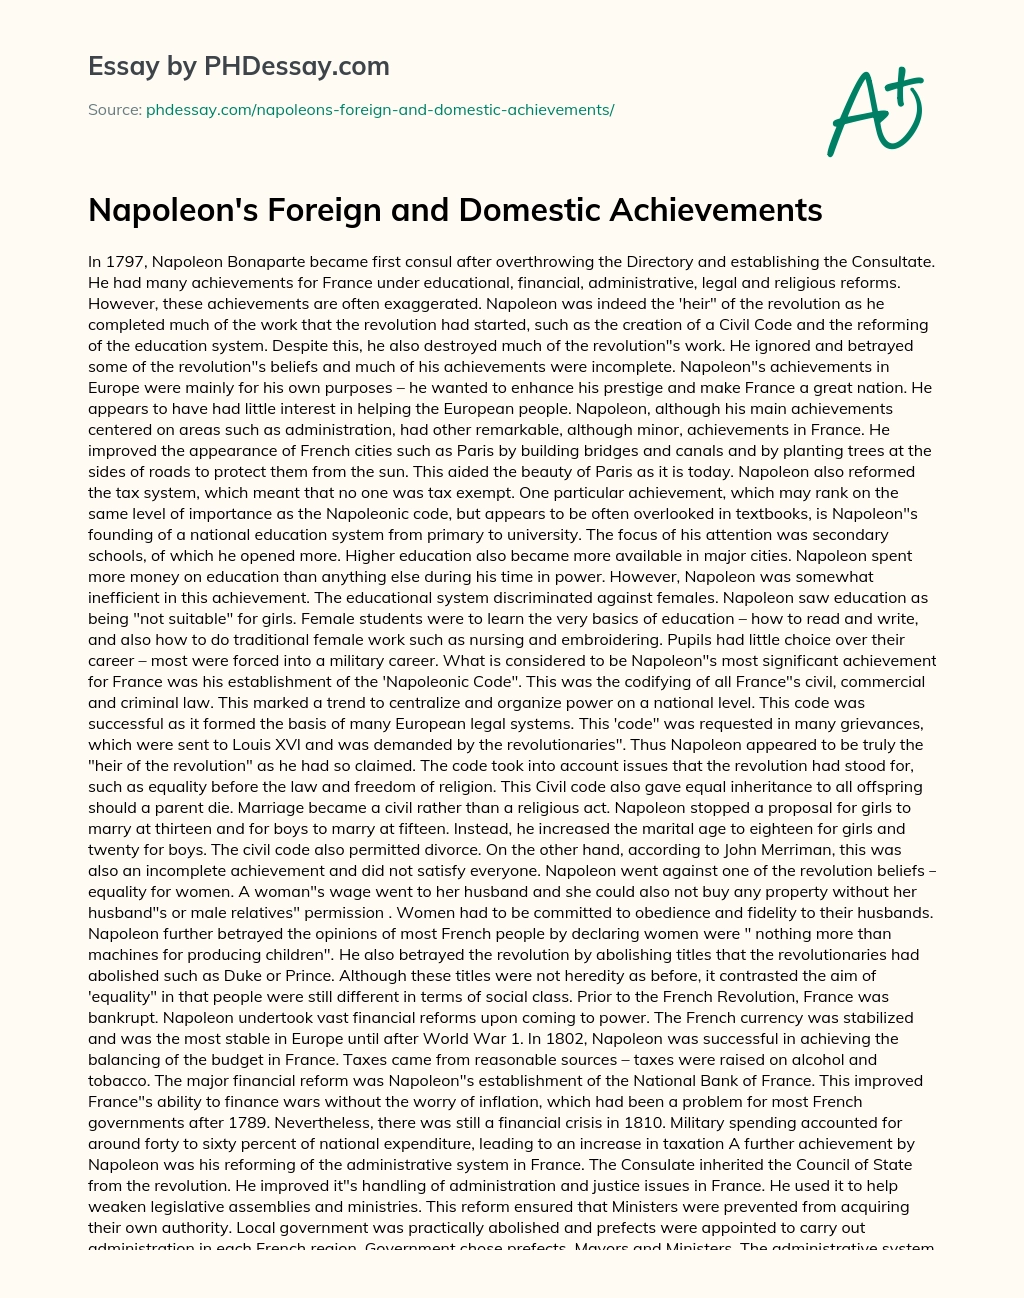 Napoleon’s Foreign and Domestic Achievements essay